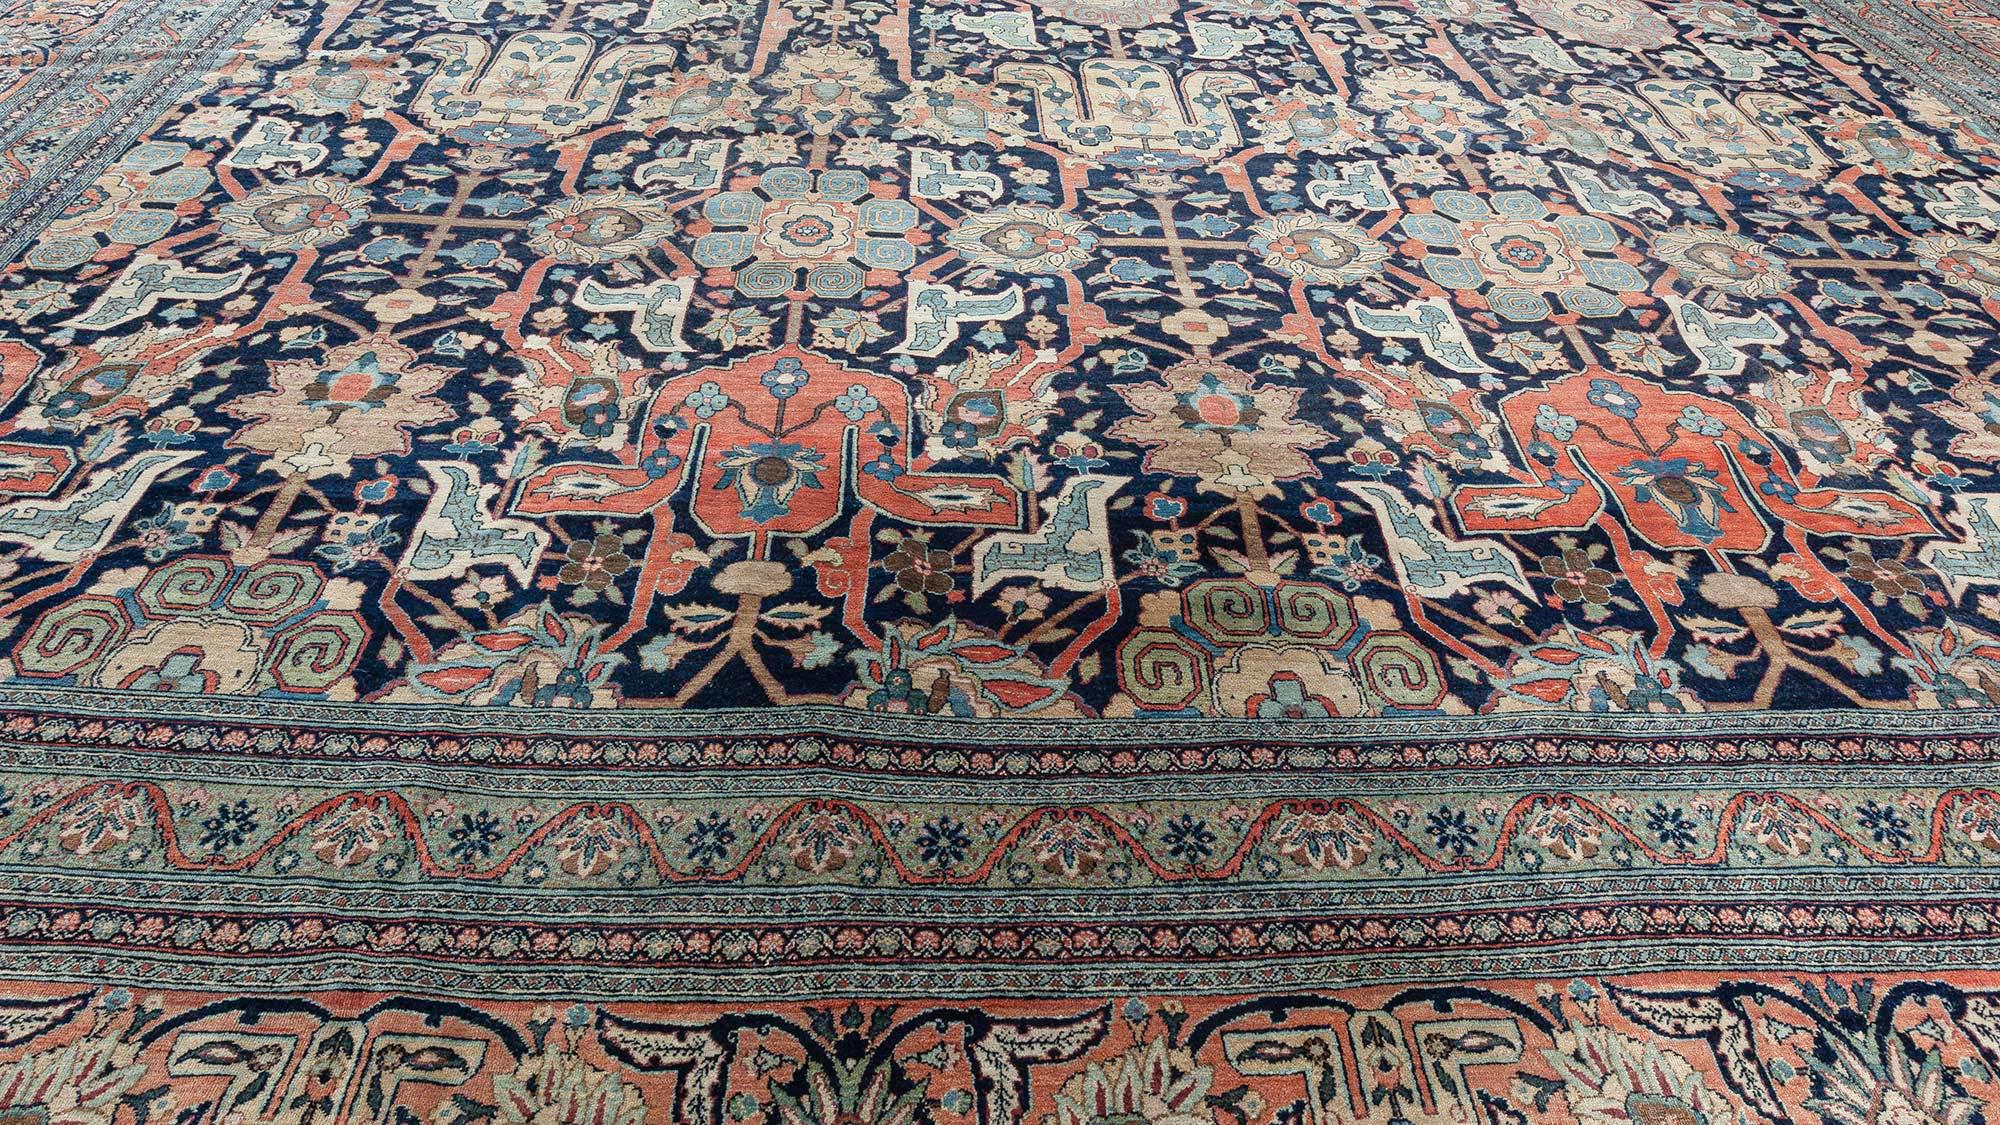 19th century Persian Tabriz wool rug
Size: 14'10